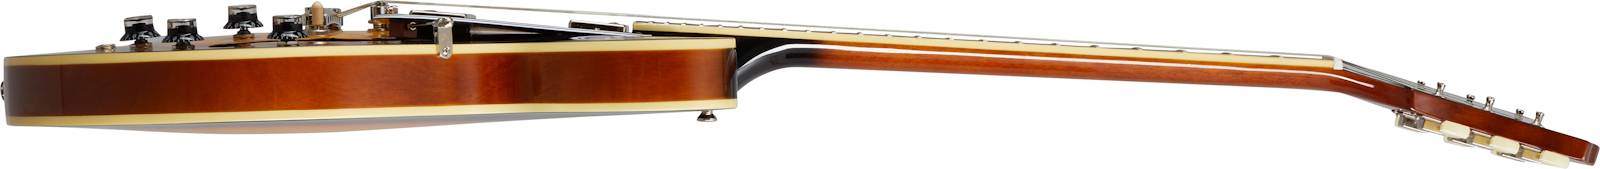 Epiphone Es-335 Inspired By Gibson Original 2h Ht Rw - Vintage Sunburst - Semi-hollow electric guitar - Variation 1